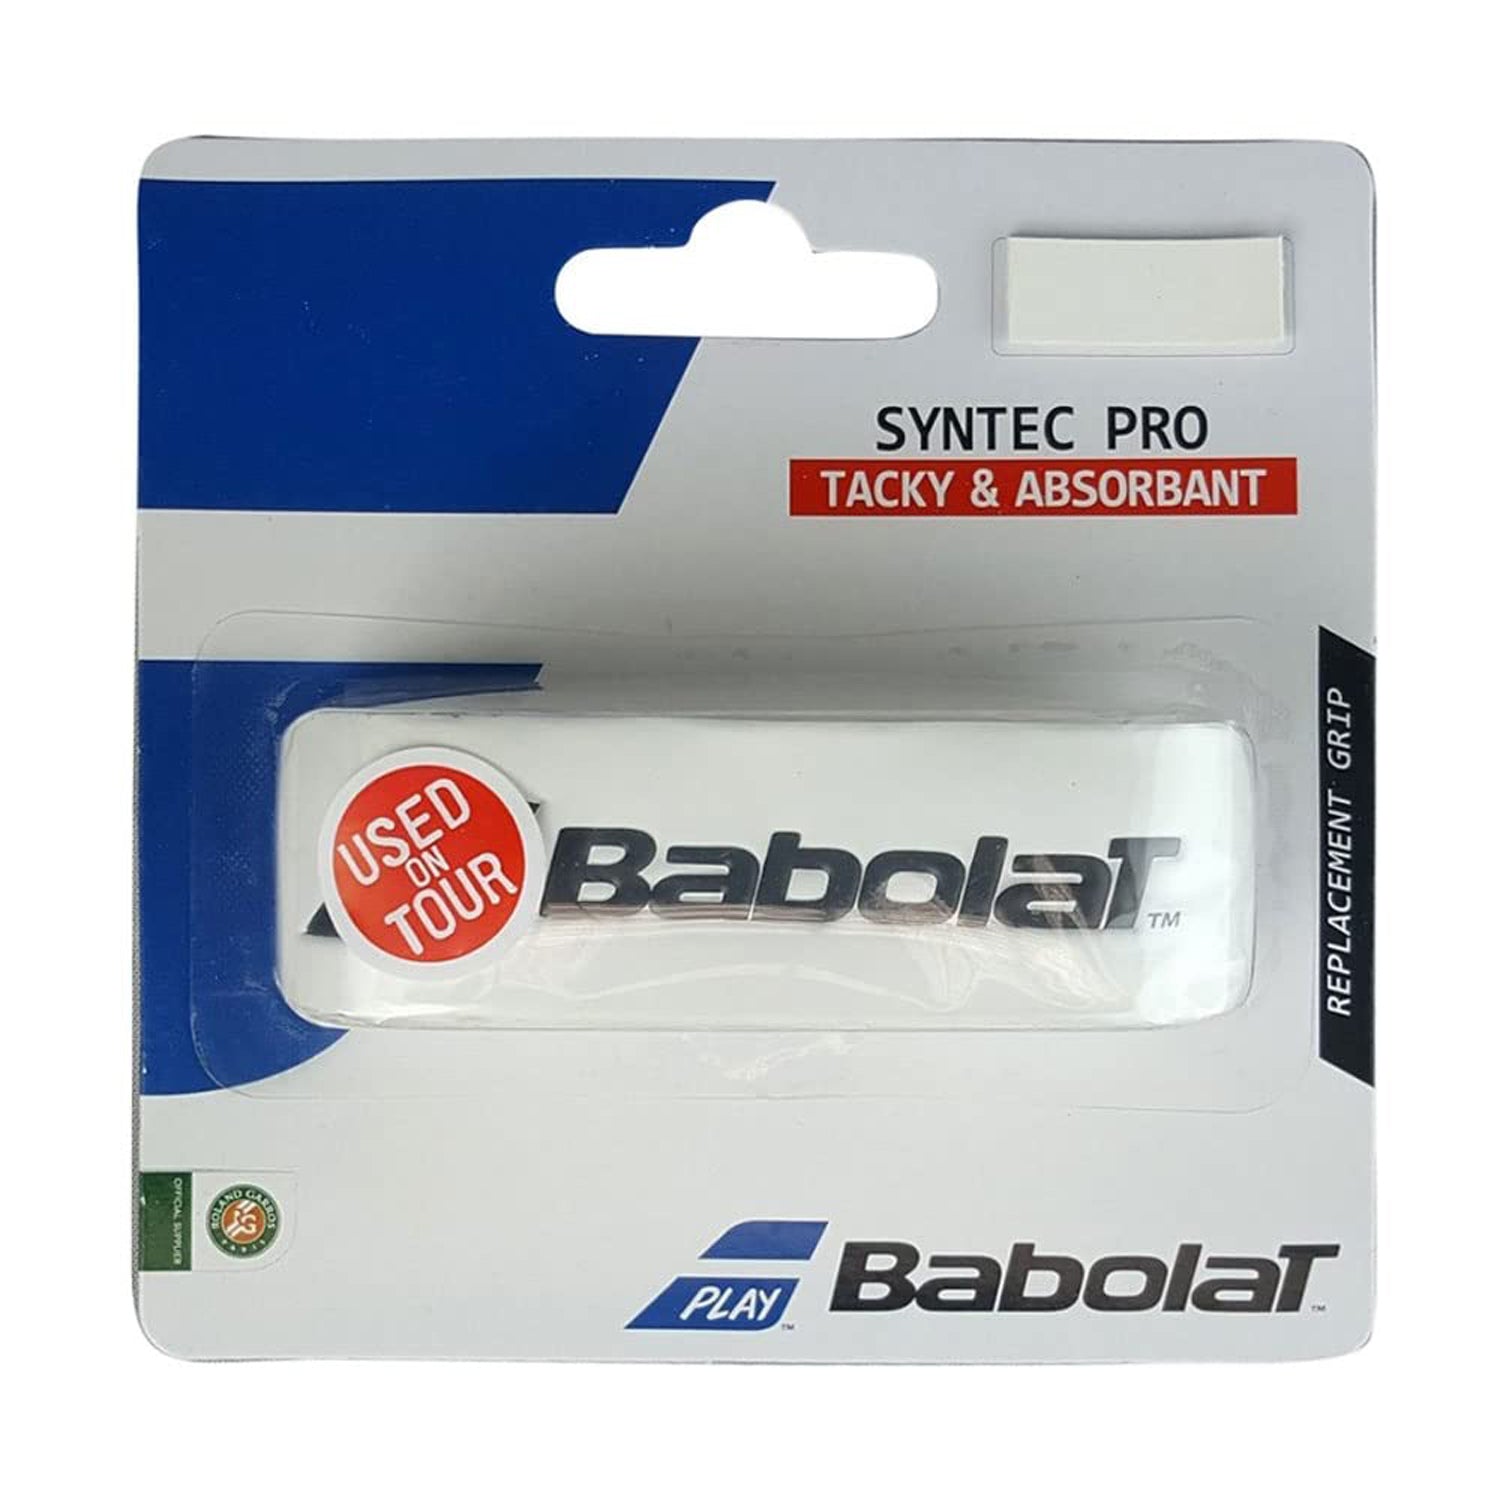 Babolat 654012-101 Tour Original X12 Tennis Grip Pack of 12 -White - Best Price online Prokicksports.com